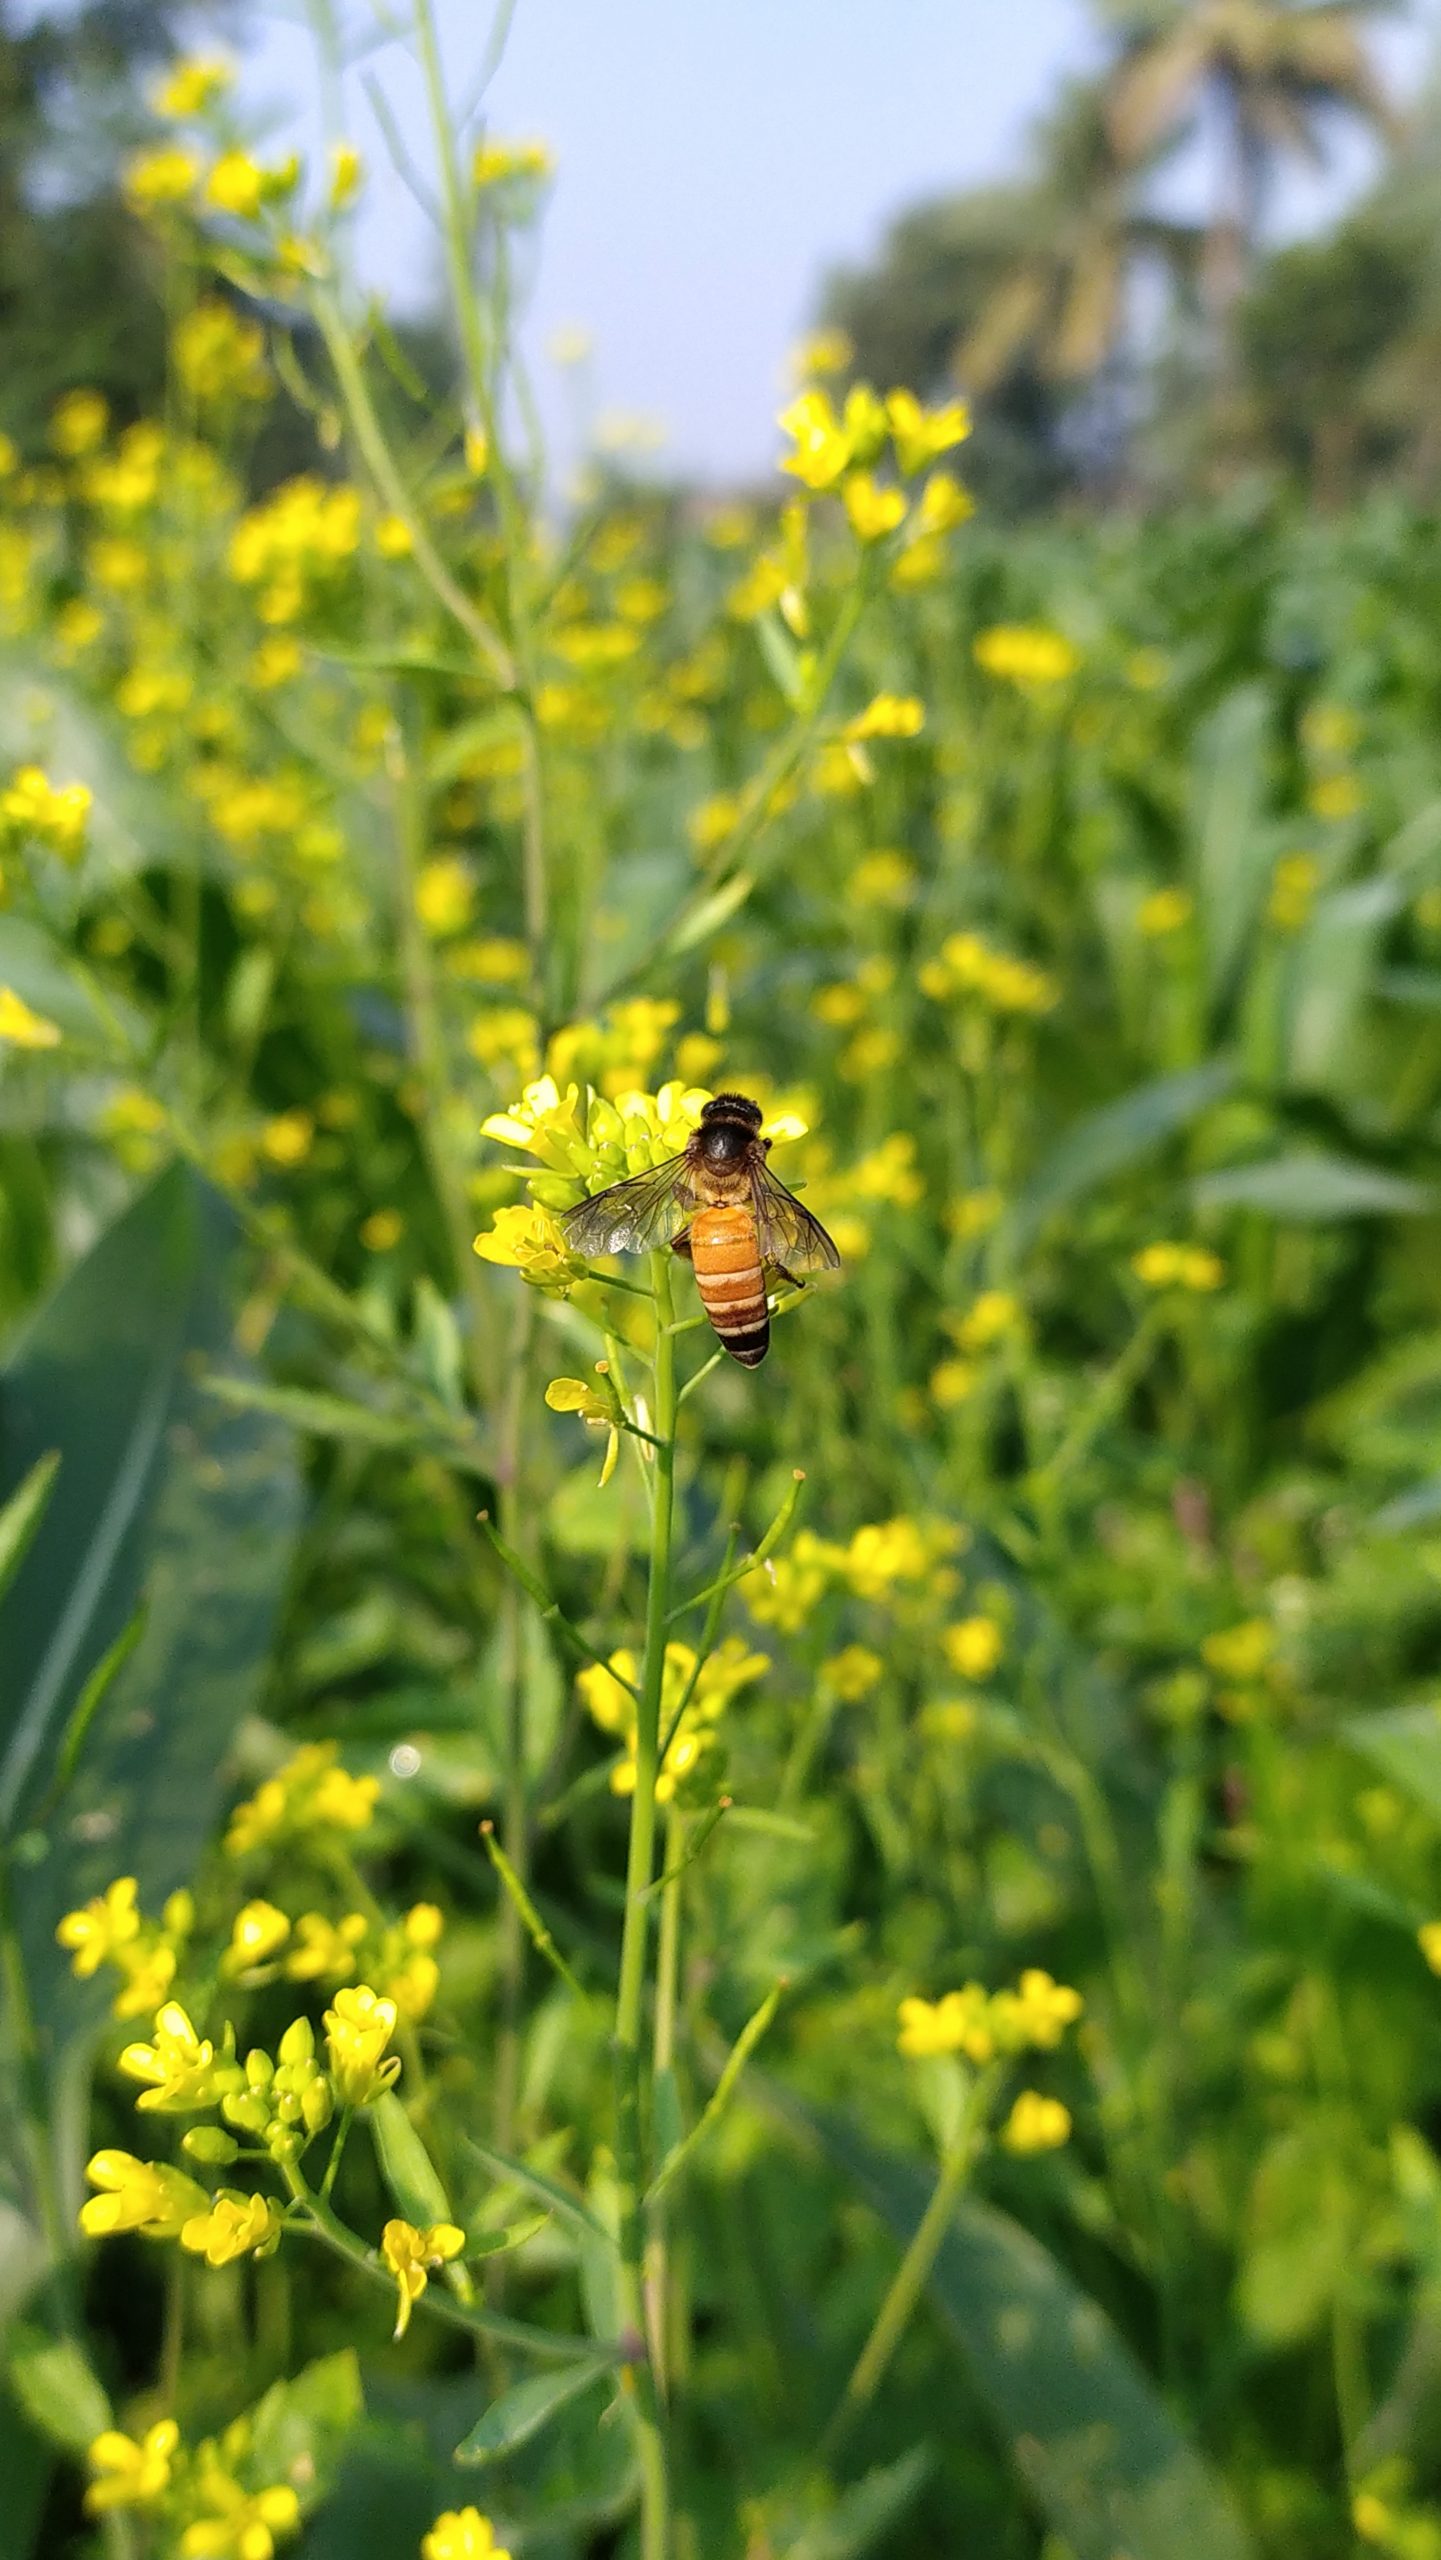 A honeybee on mustard plant